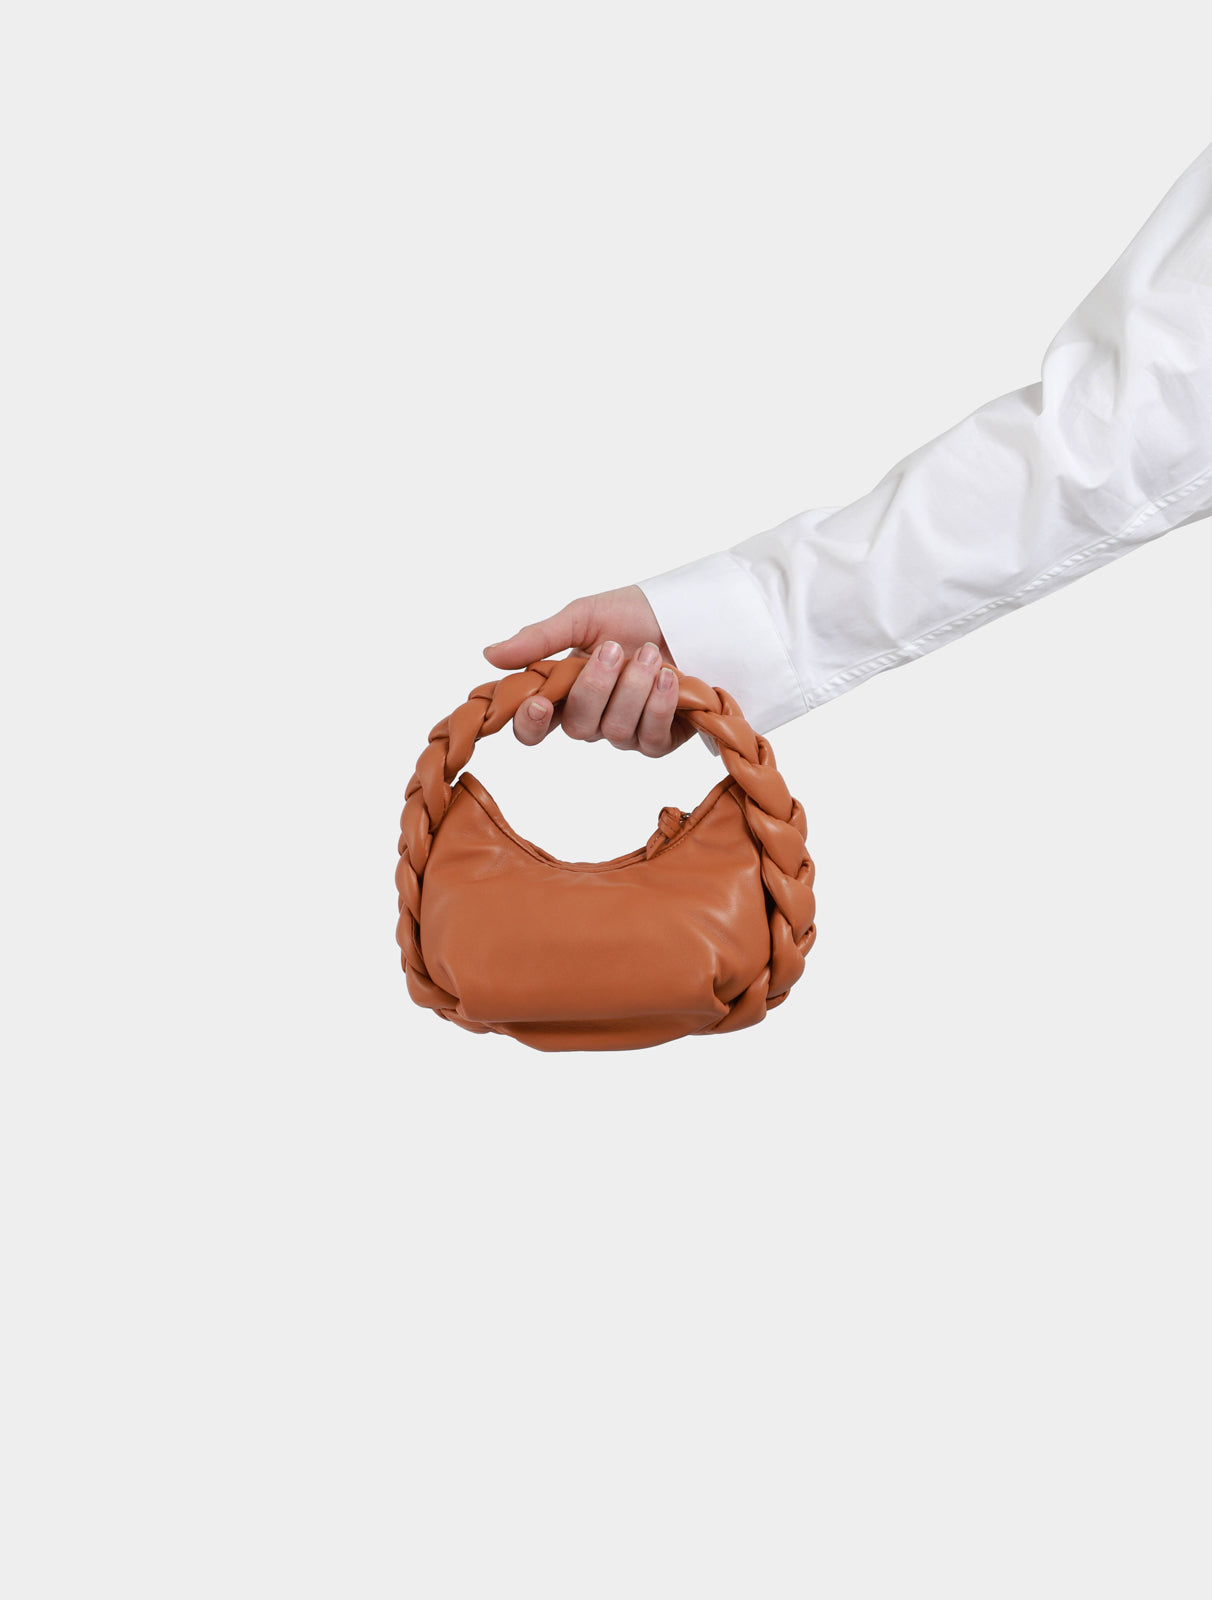 Plait Handle Tote Bag pattern - Sew Modern Bags | Sew tote bag pattern, Bag  patterns to sew, Tote bag pattern